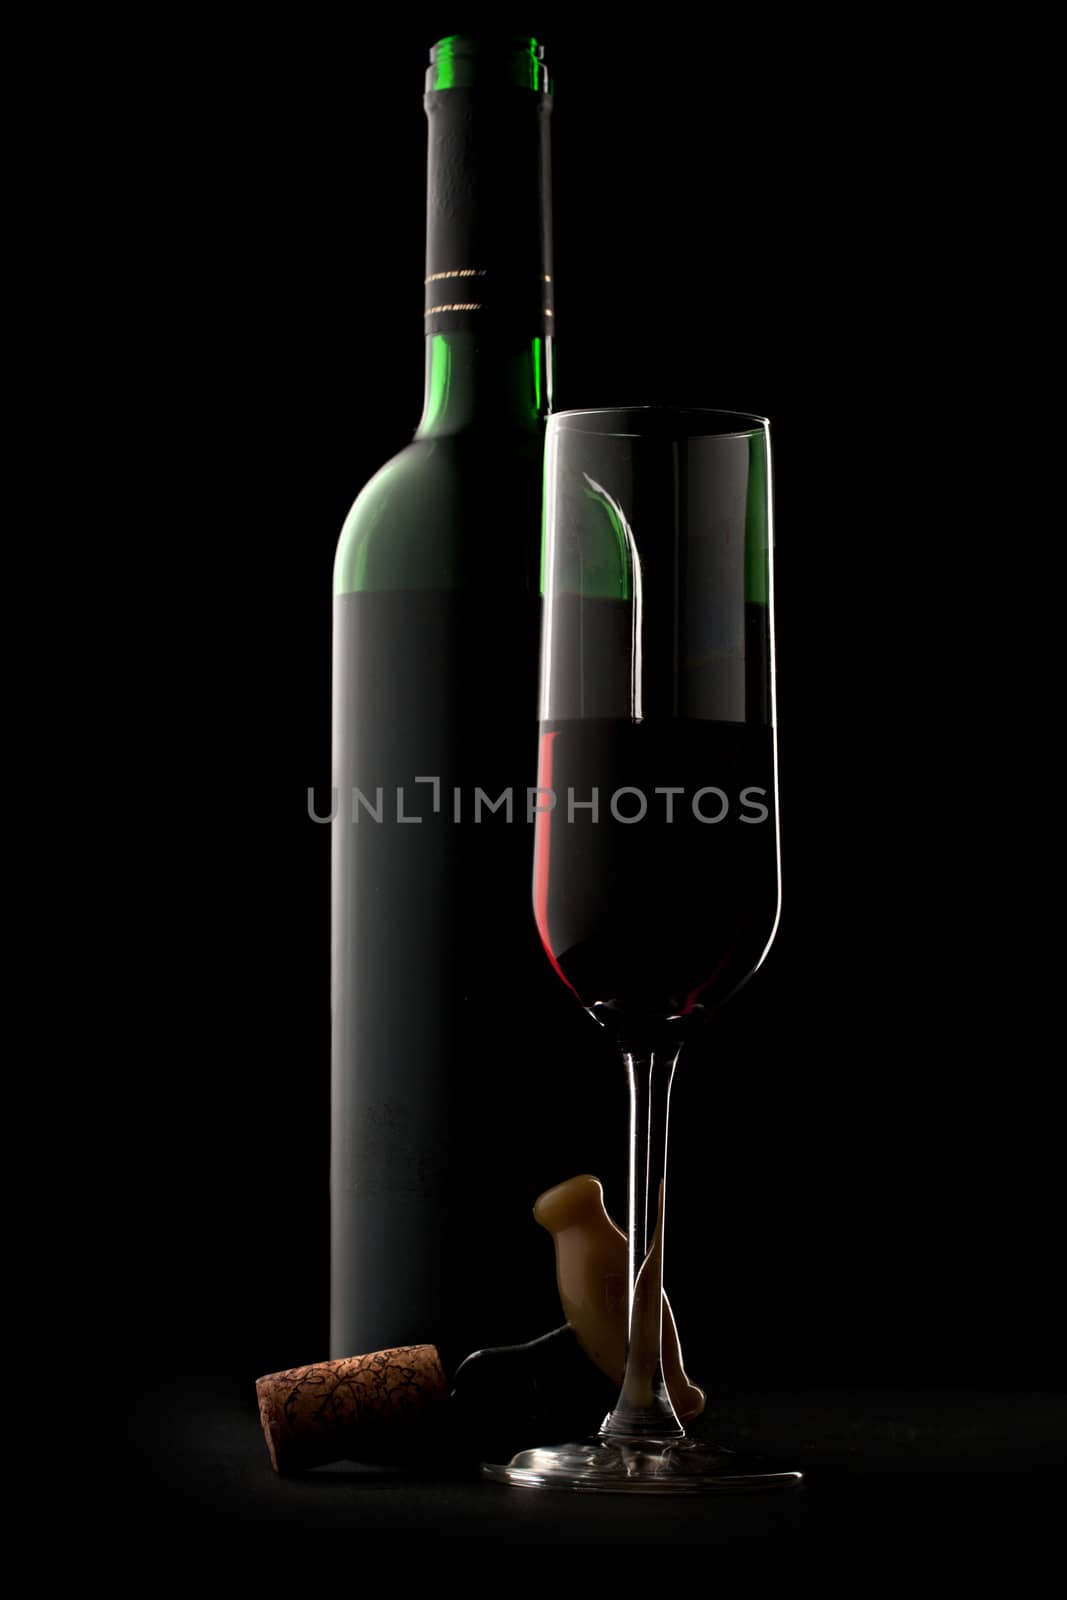 Bottle and glass of wine in black by Garsya